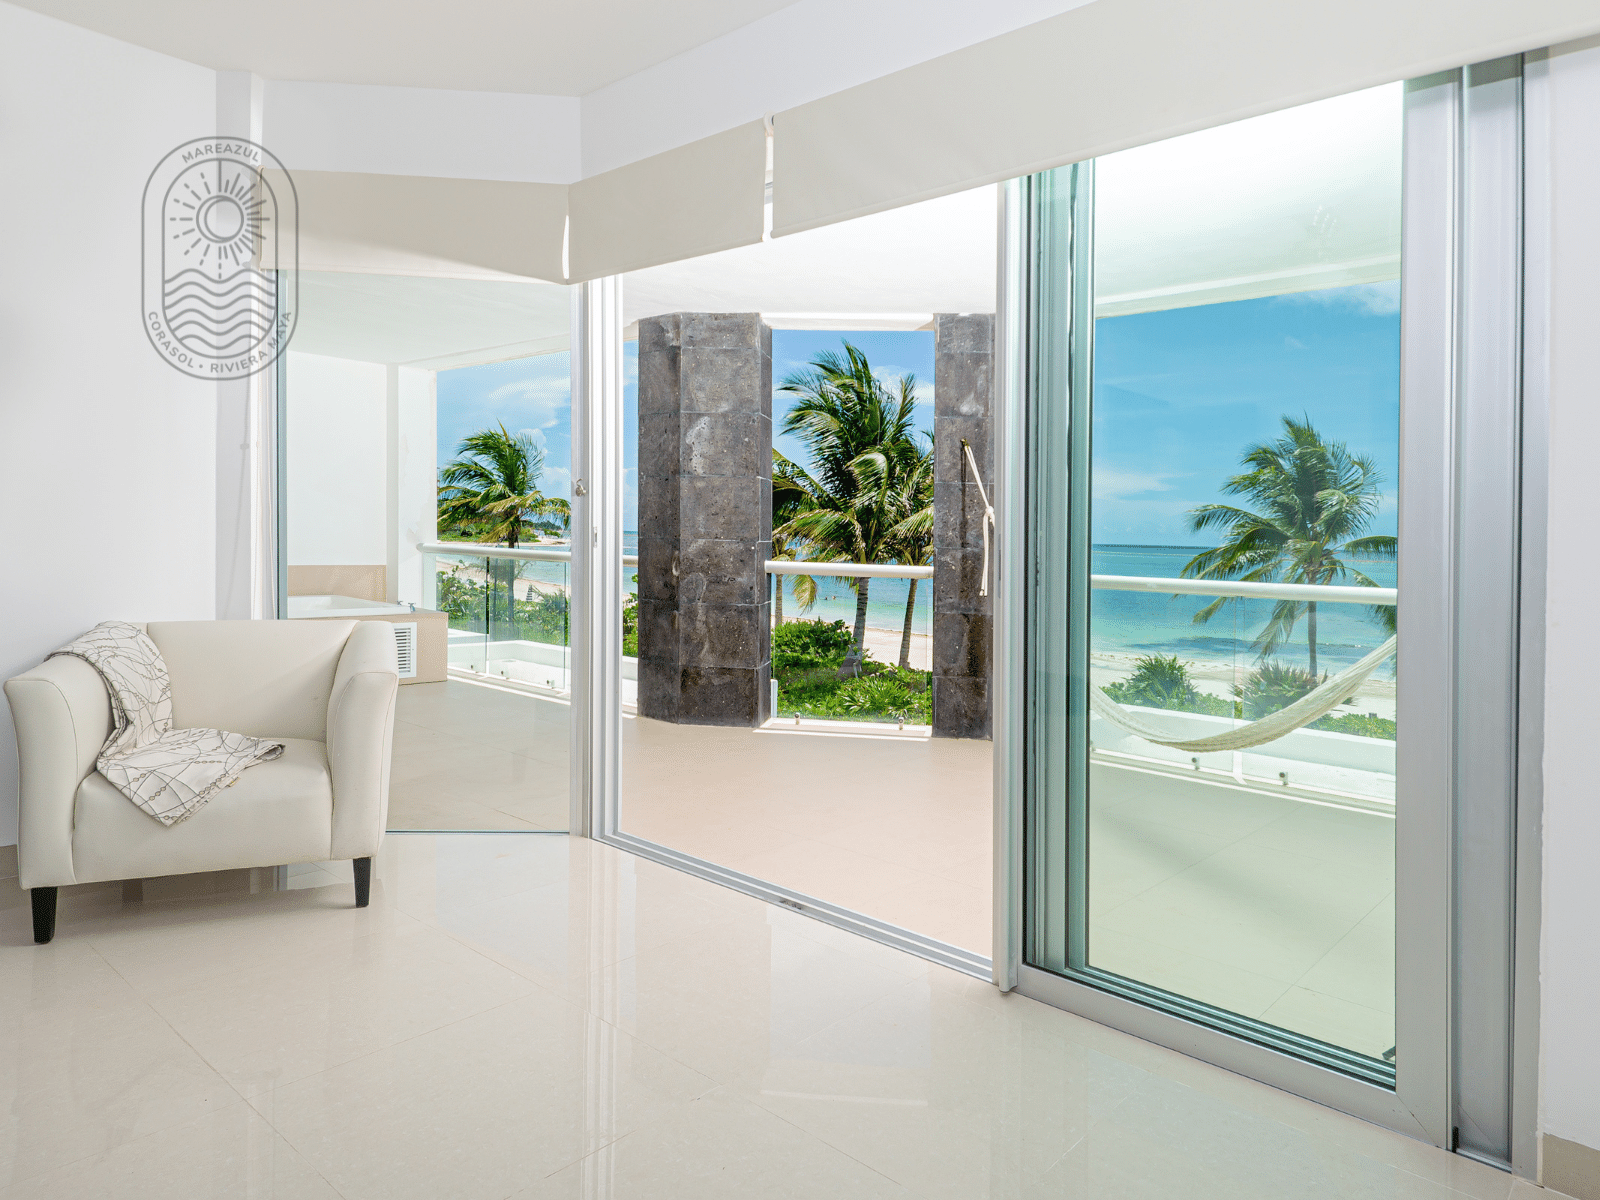 Pelicano Properties - Agencia Inmobiliaria - Playa del Carmen - Tulum - Cancun - Mahahual - Bacalar (36)